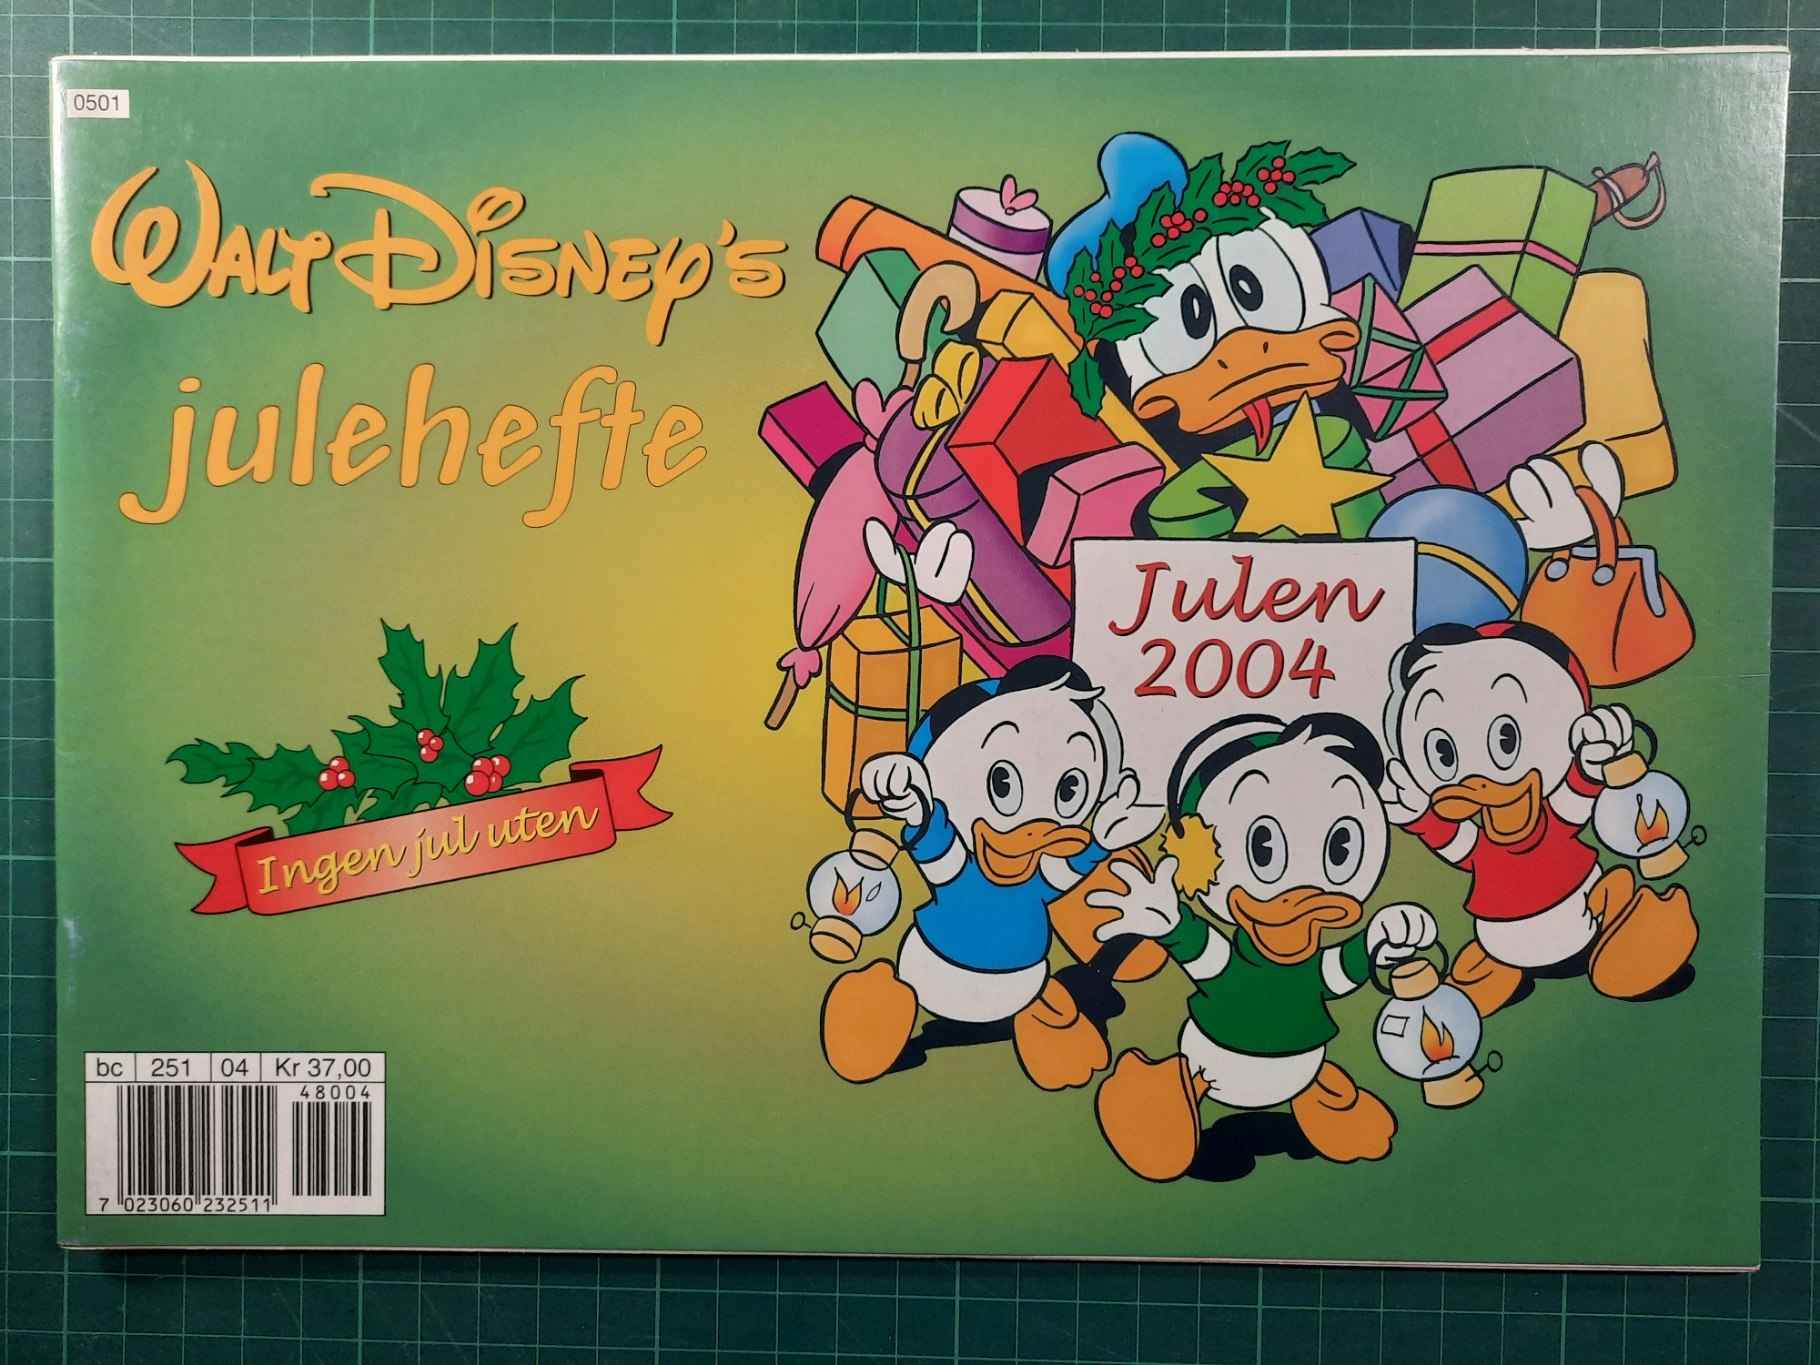 Walt Disney's Julehefte 2004